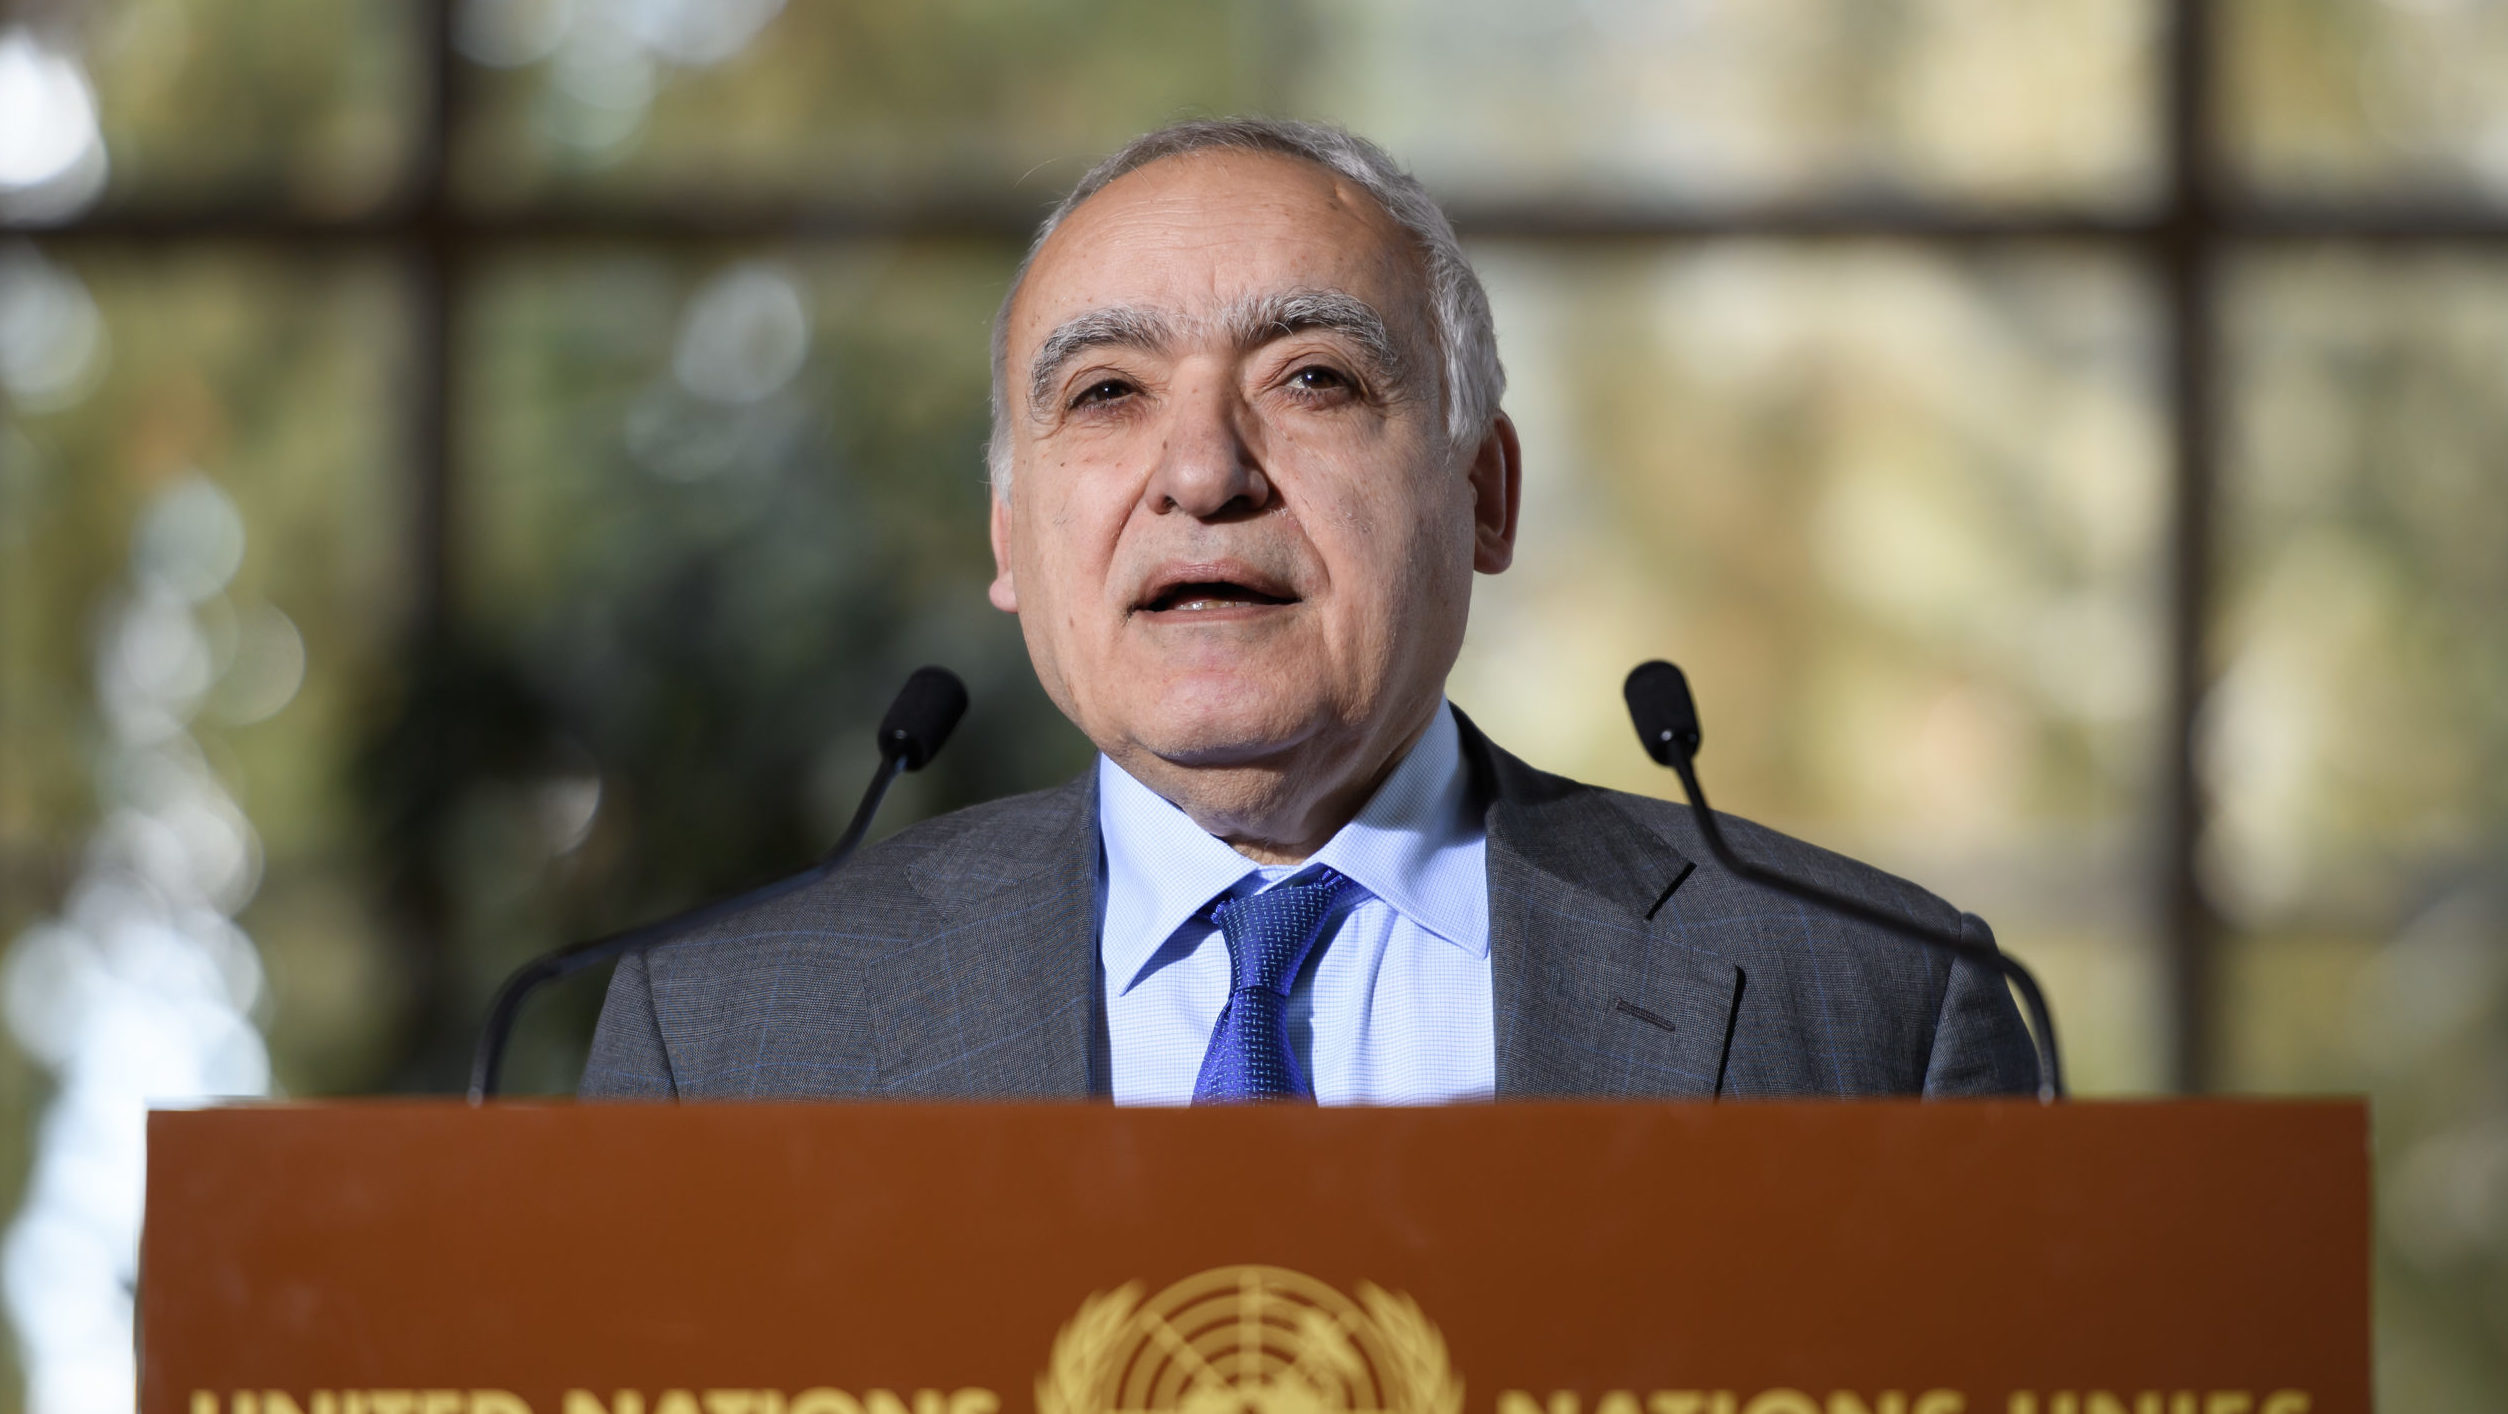 UN Special Envoy for Libya Announces Resignation, Citing Health